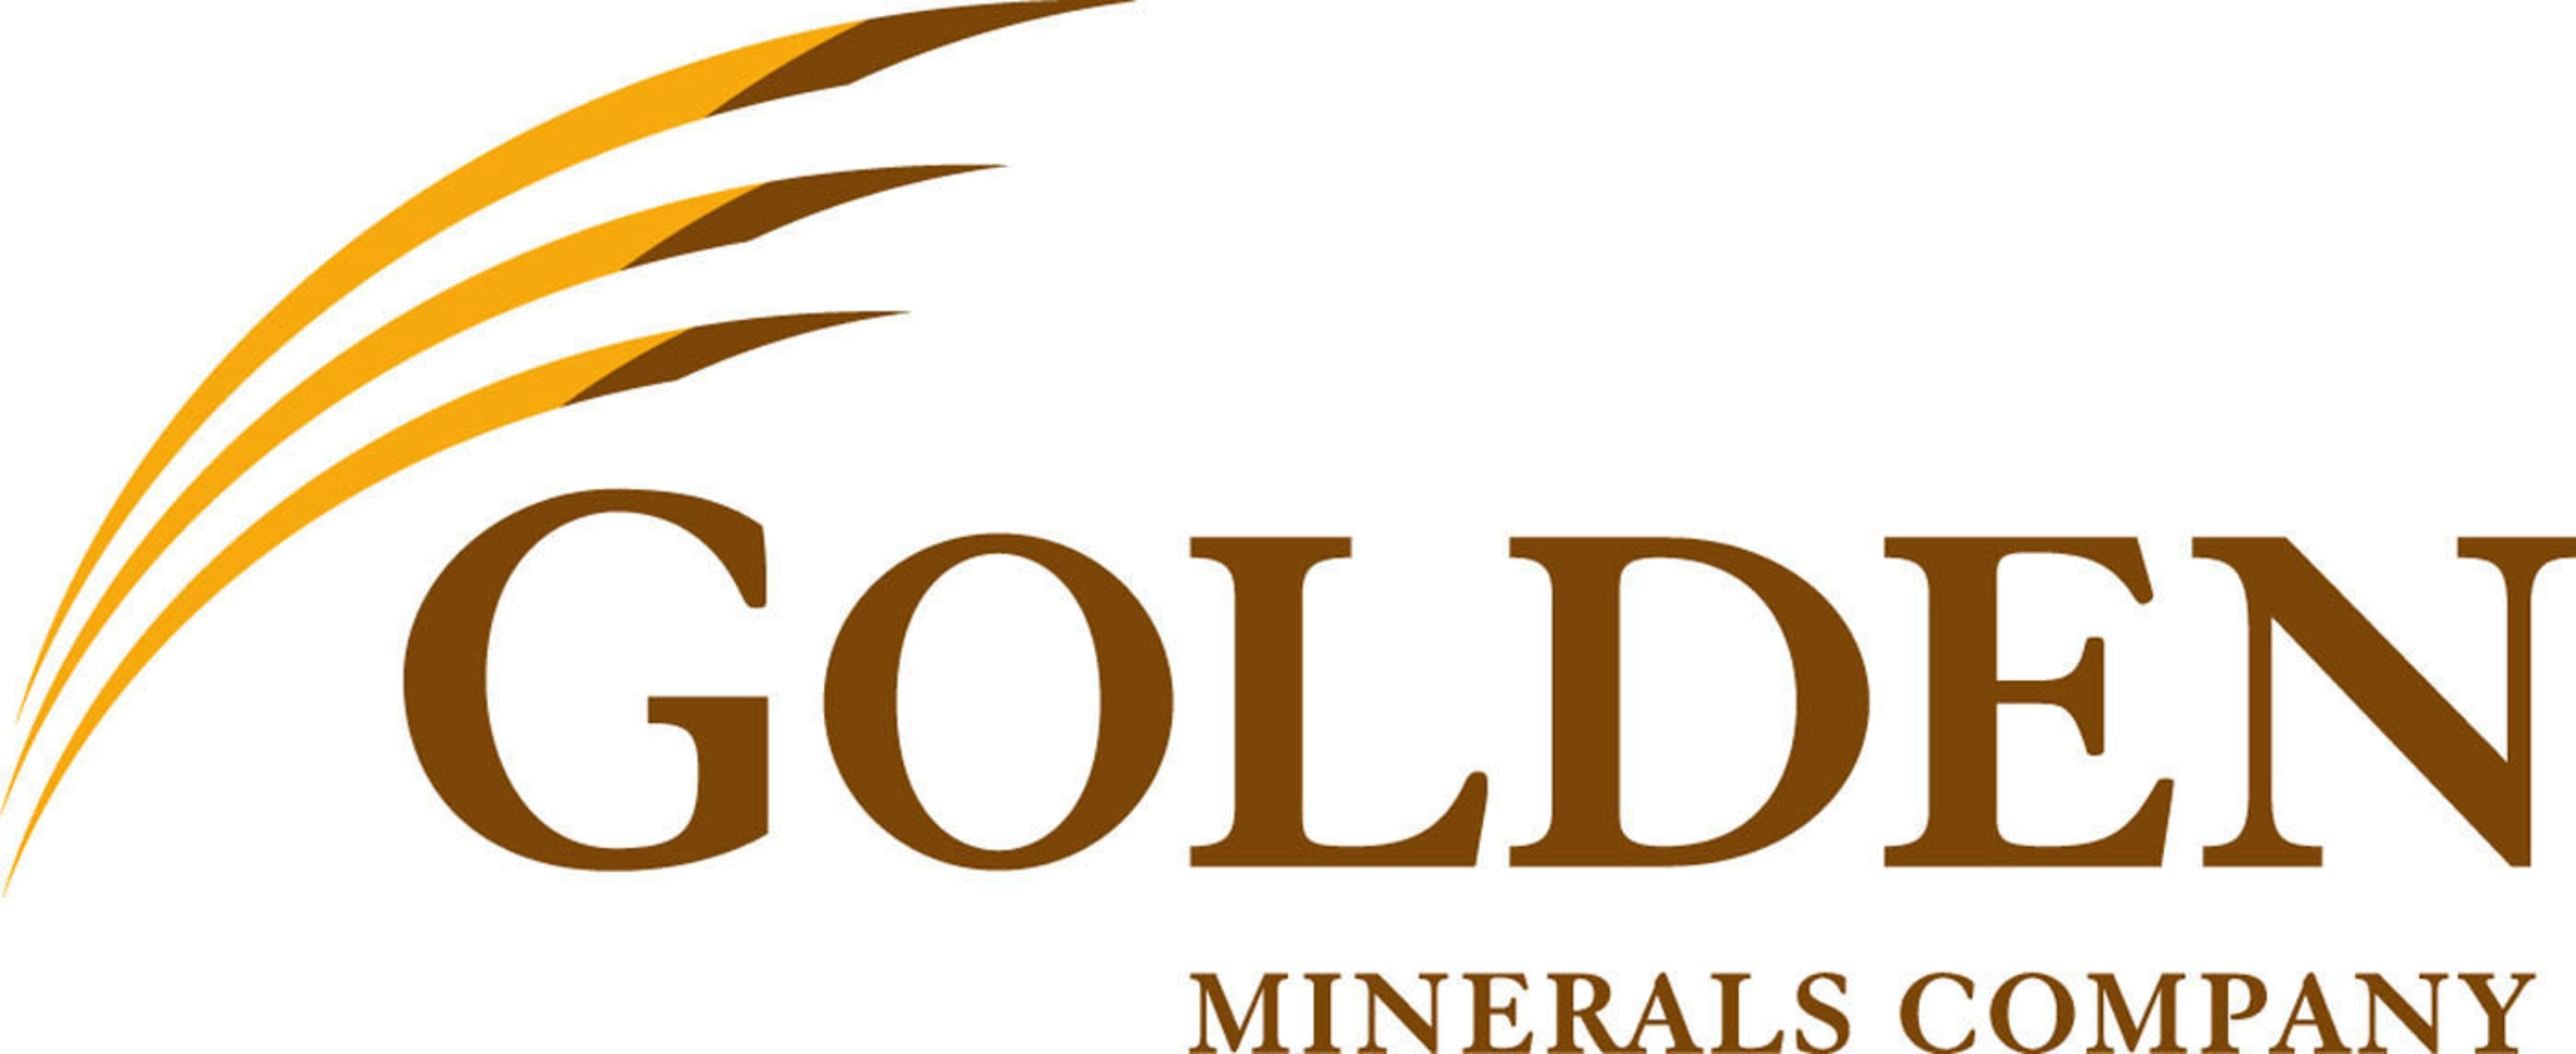 Golden Minerals Company News Release Logo. (PRNewsFoto/Golden Minerals Company) (PRNewsFoto/)